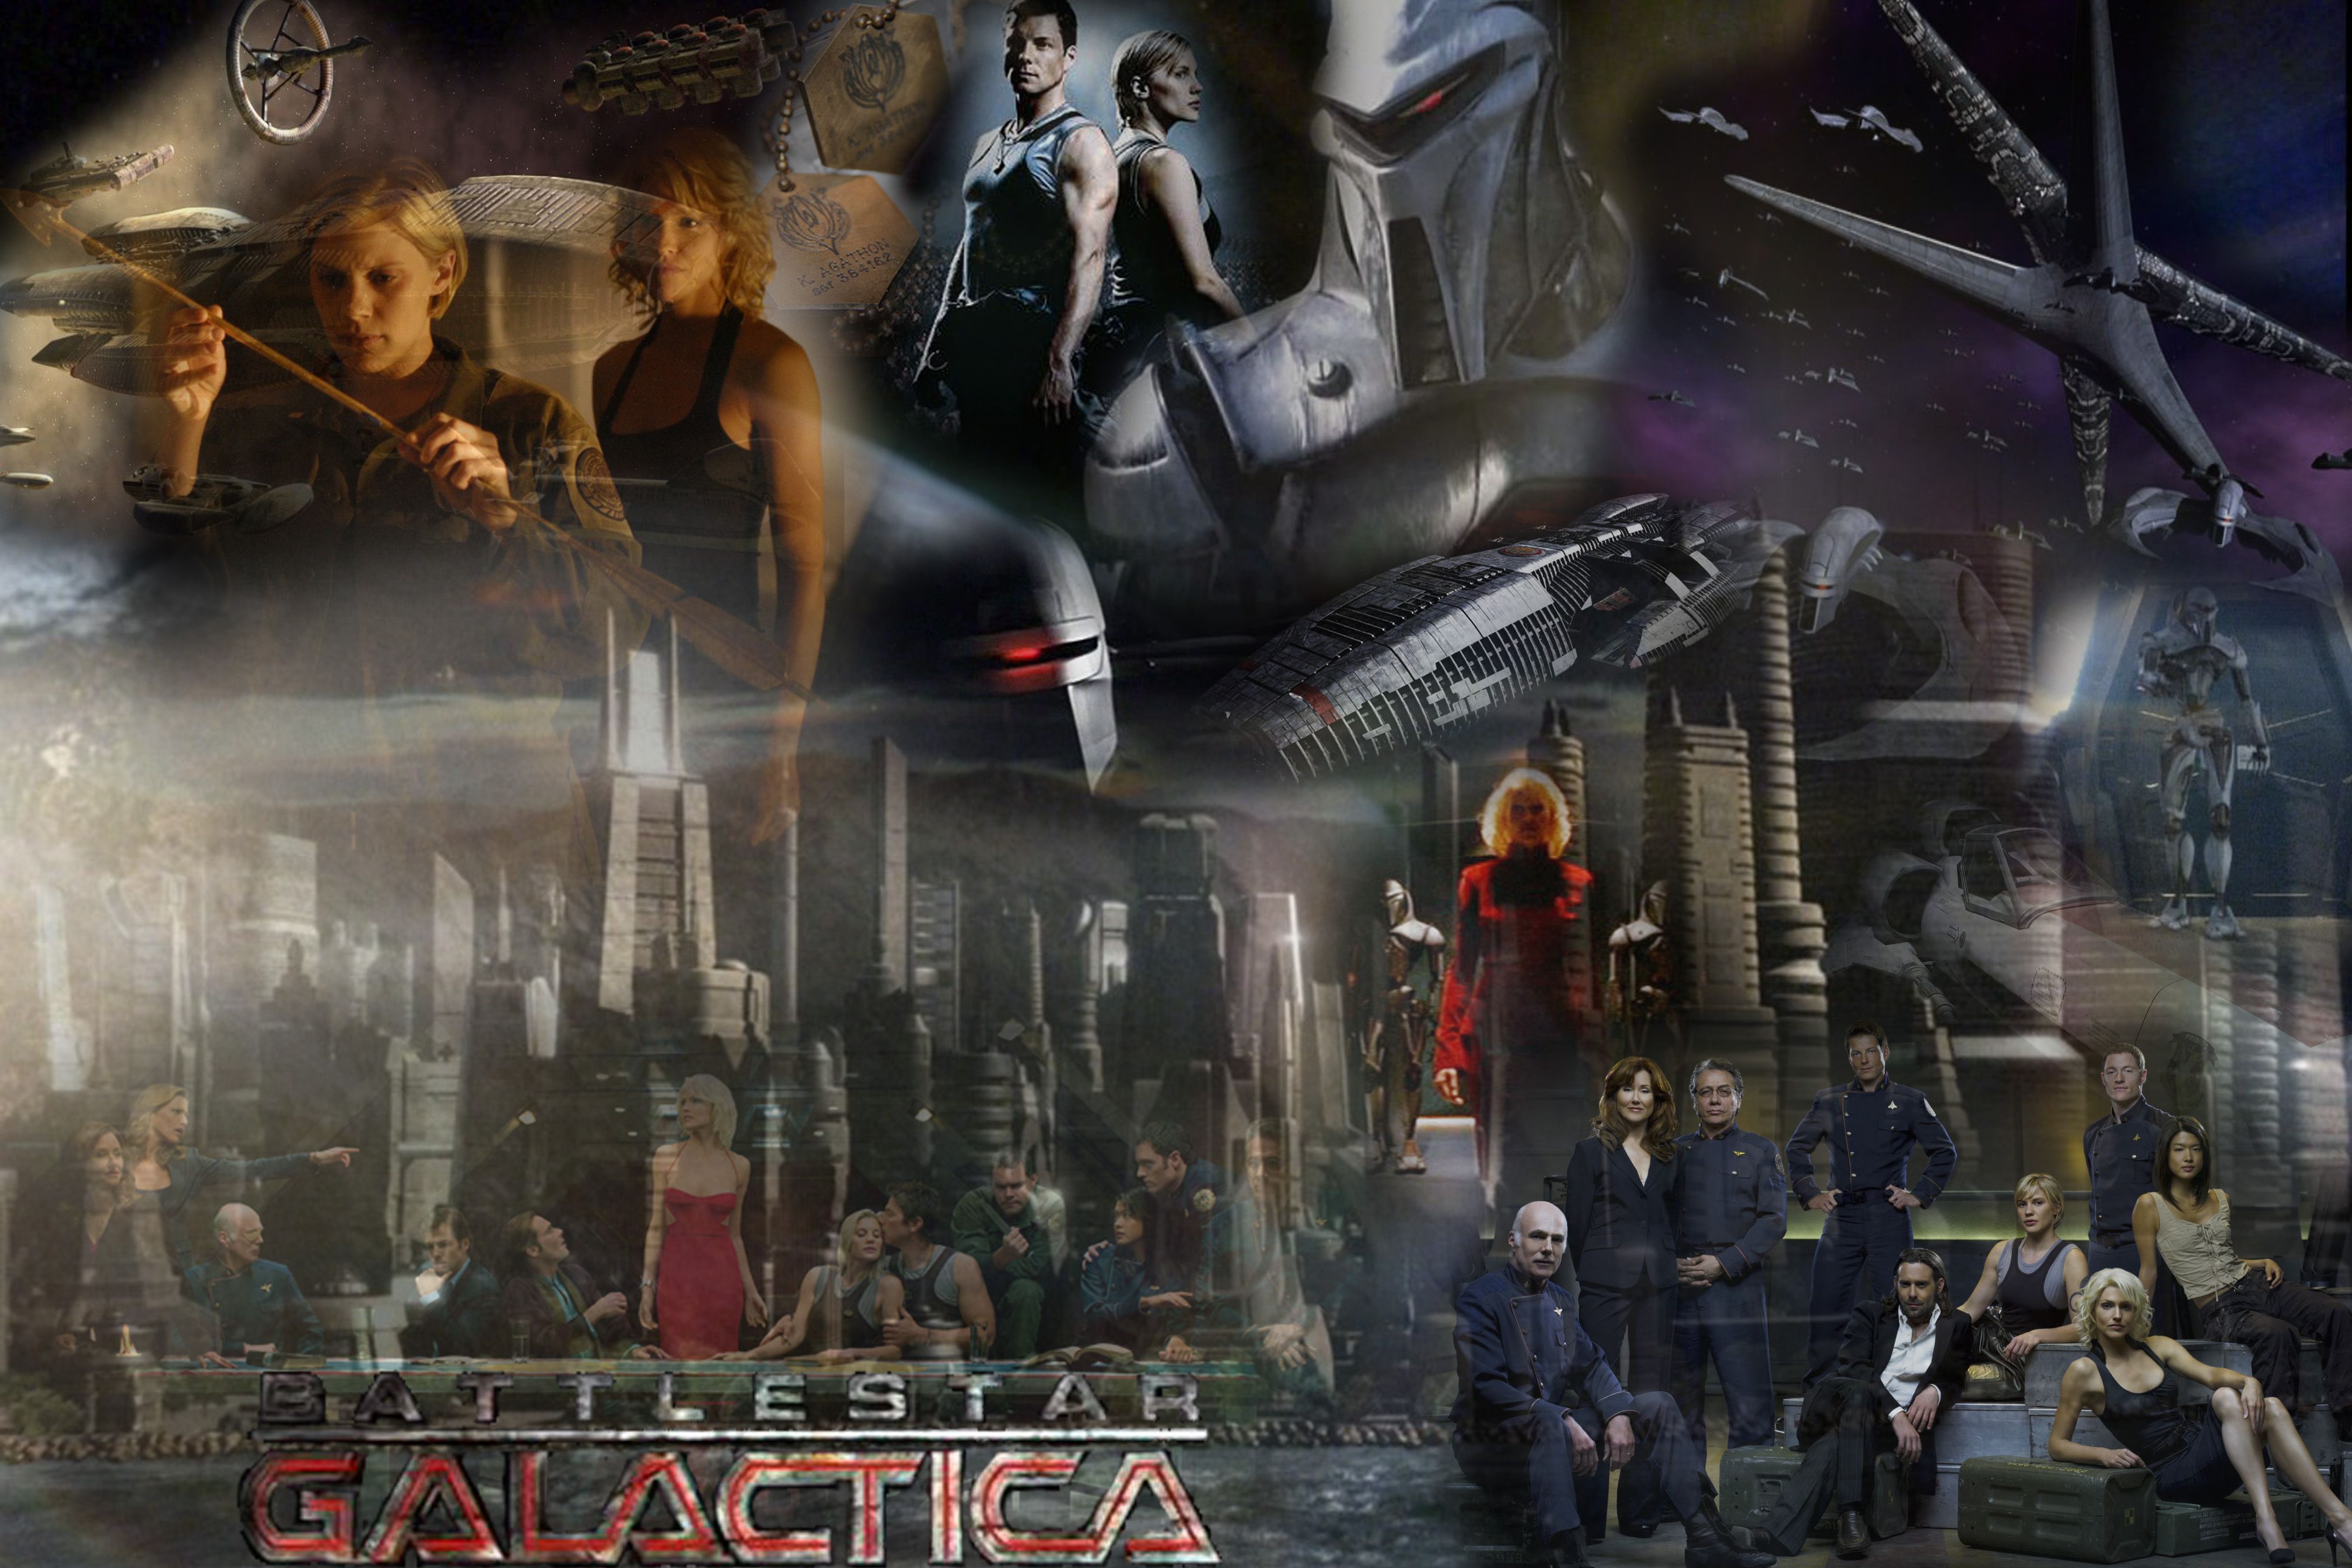 Battlestar Galactica Wallpaper